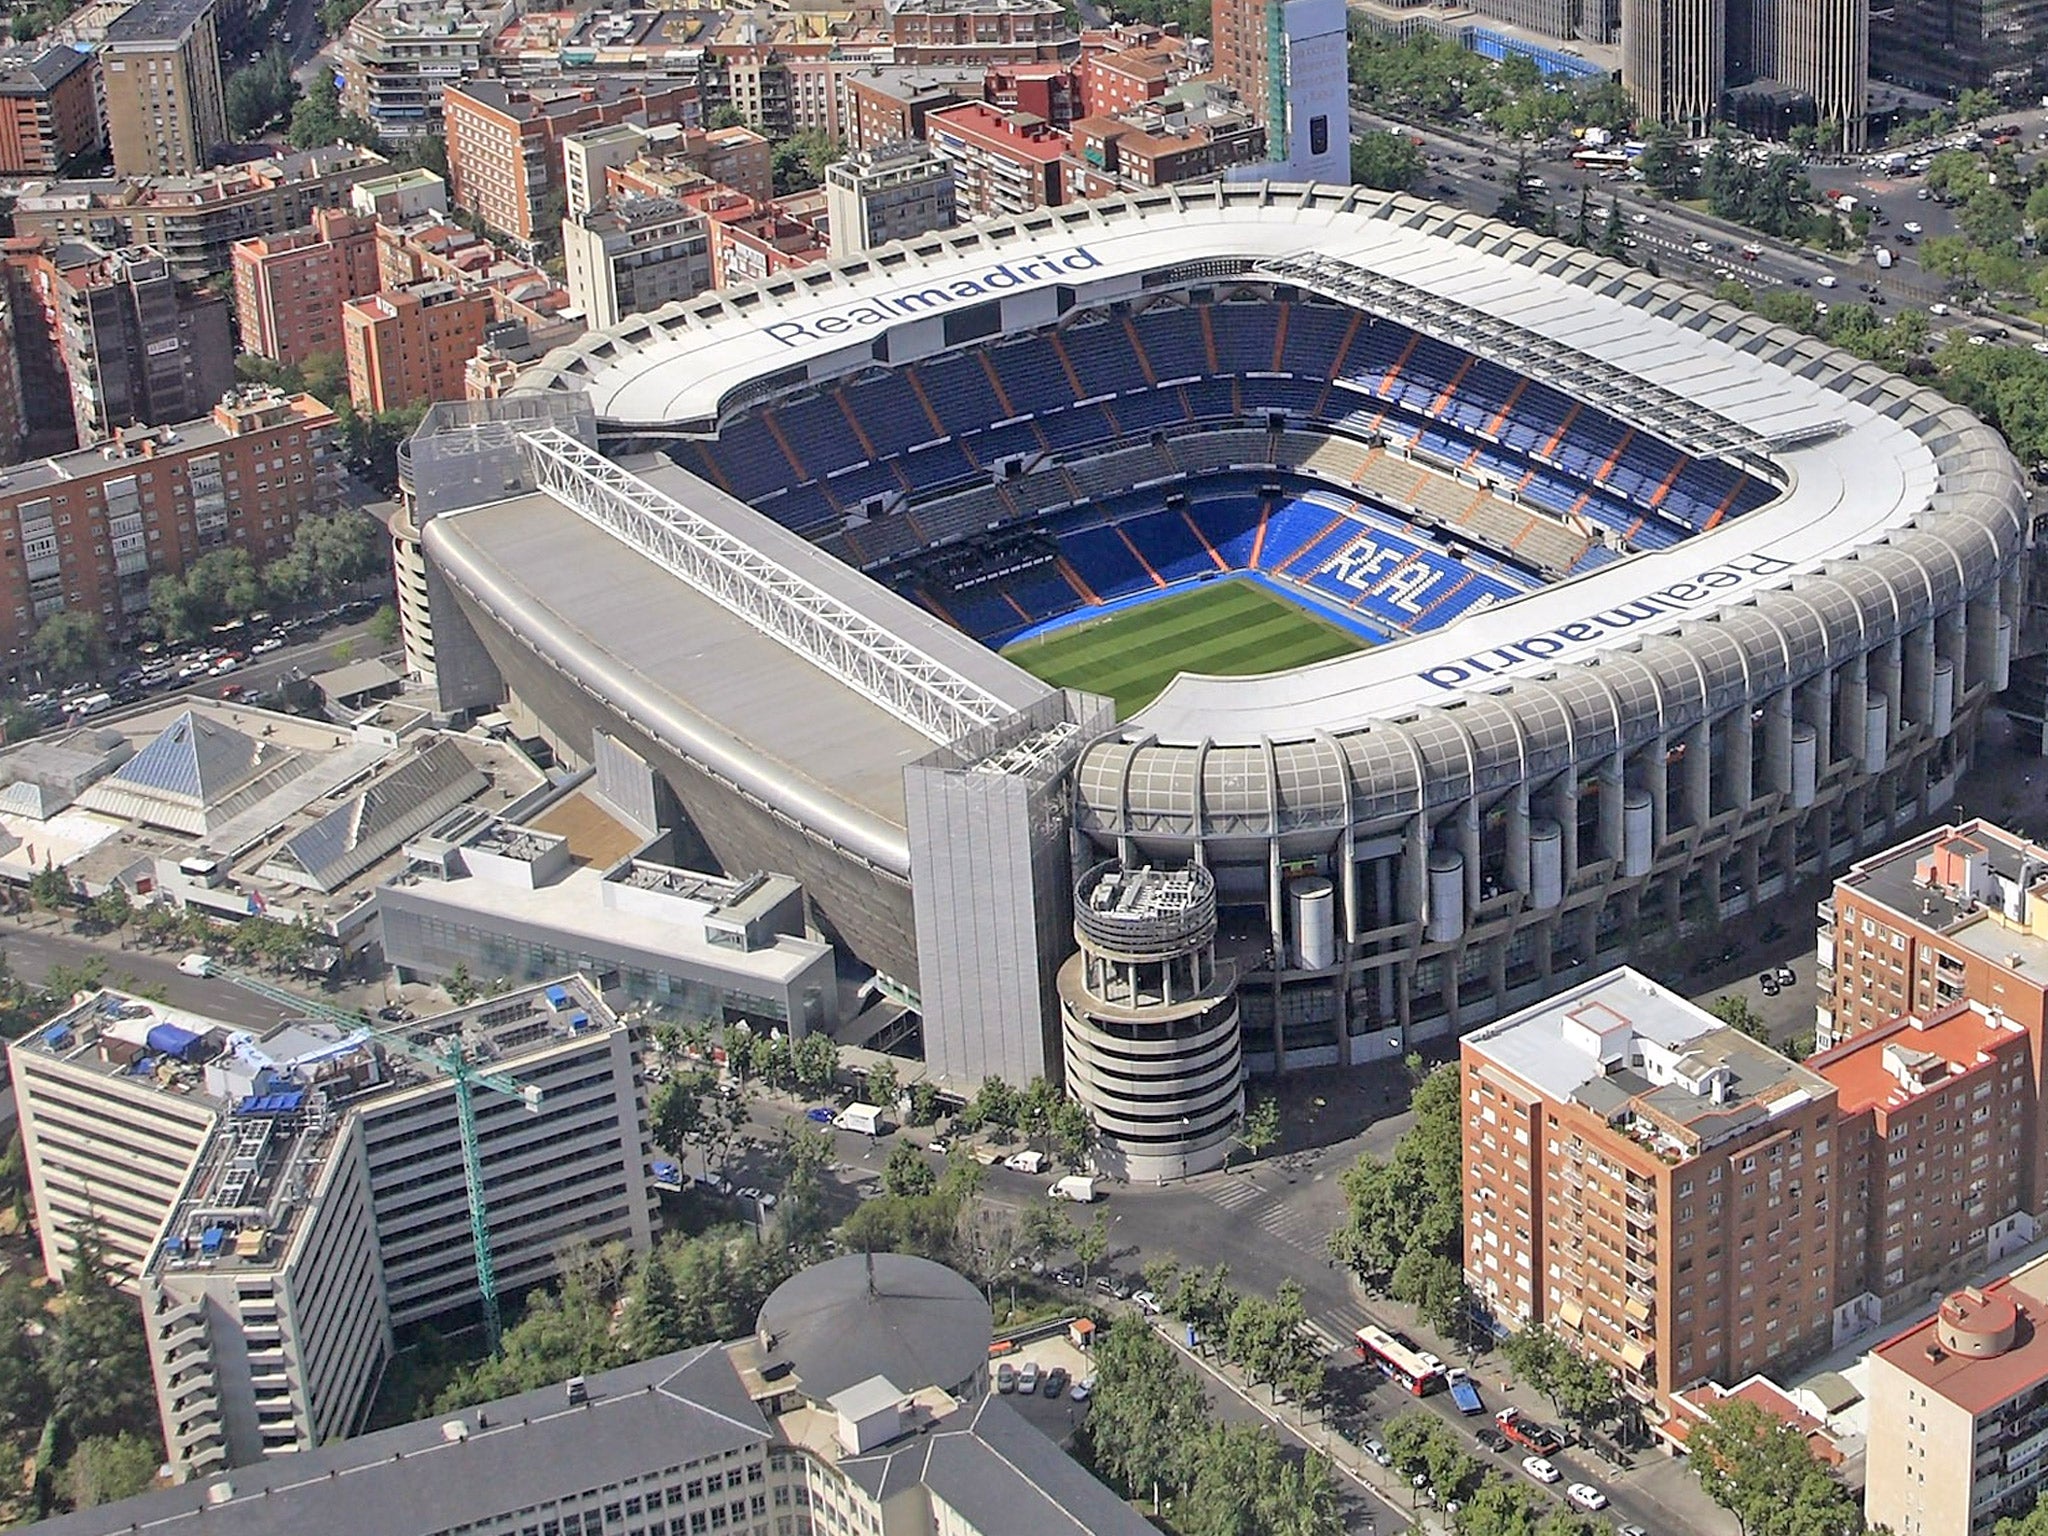 The Santiago Bernabeu stadium, home of Real Madrid